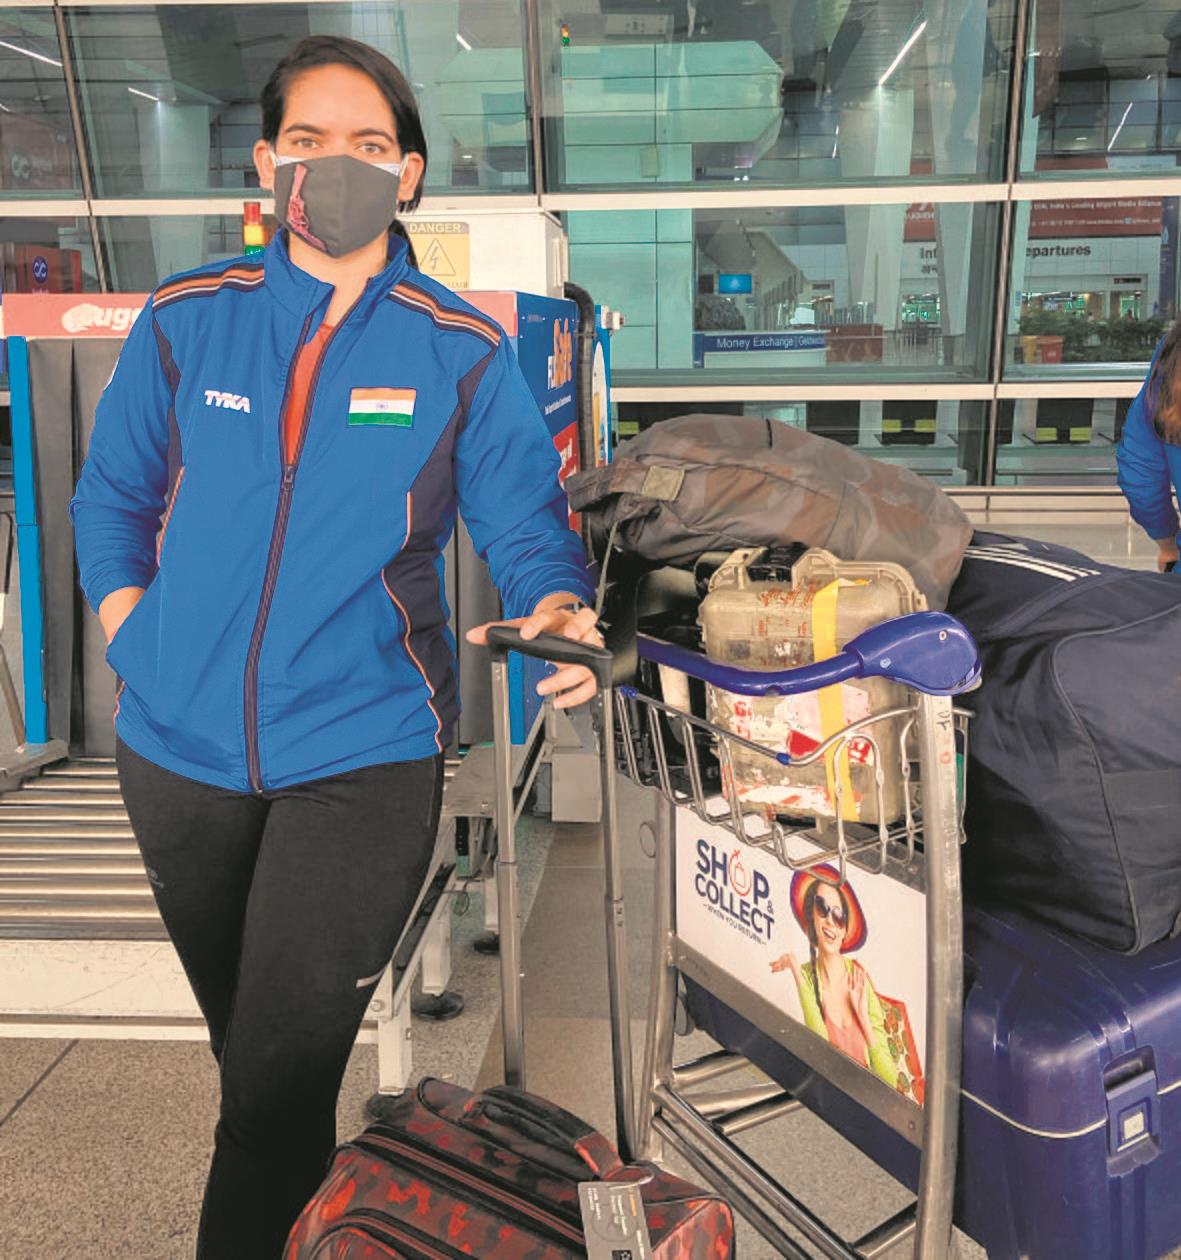 India’s Olympics shooters fly to train in Croatia